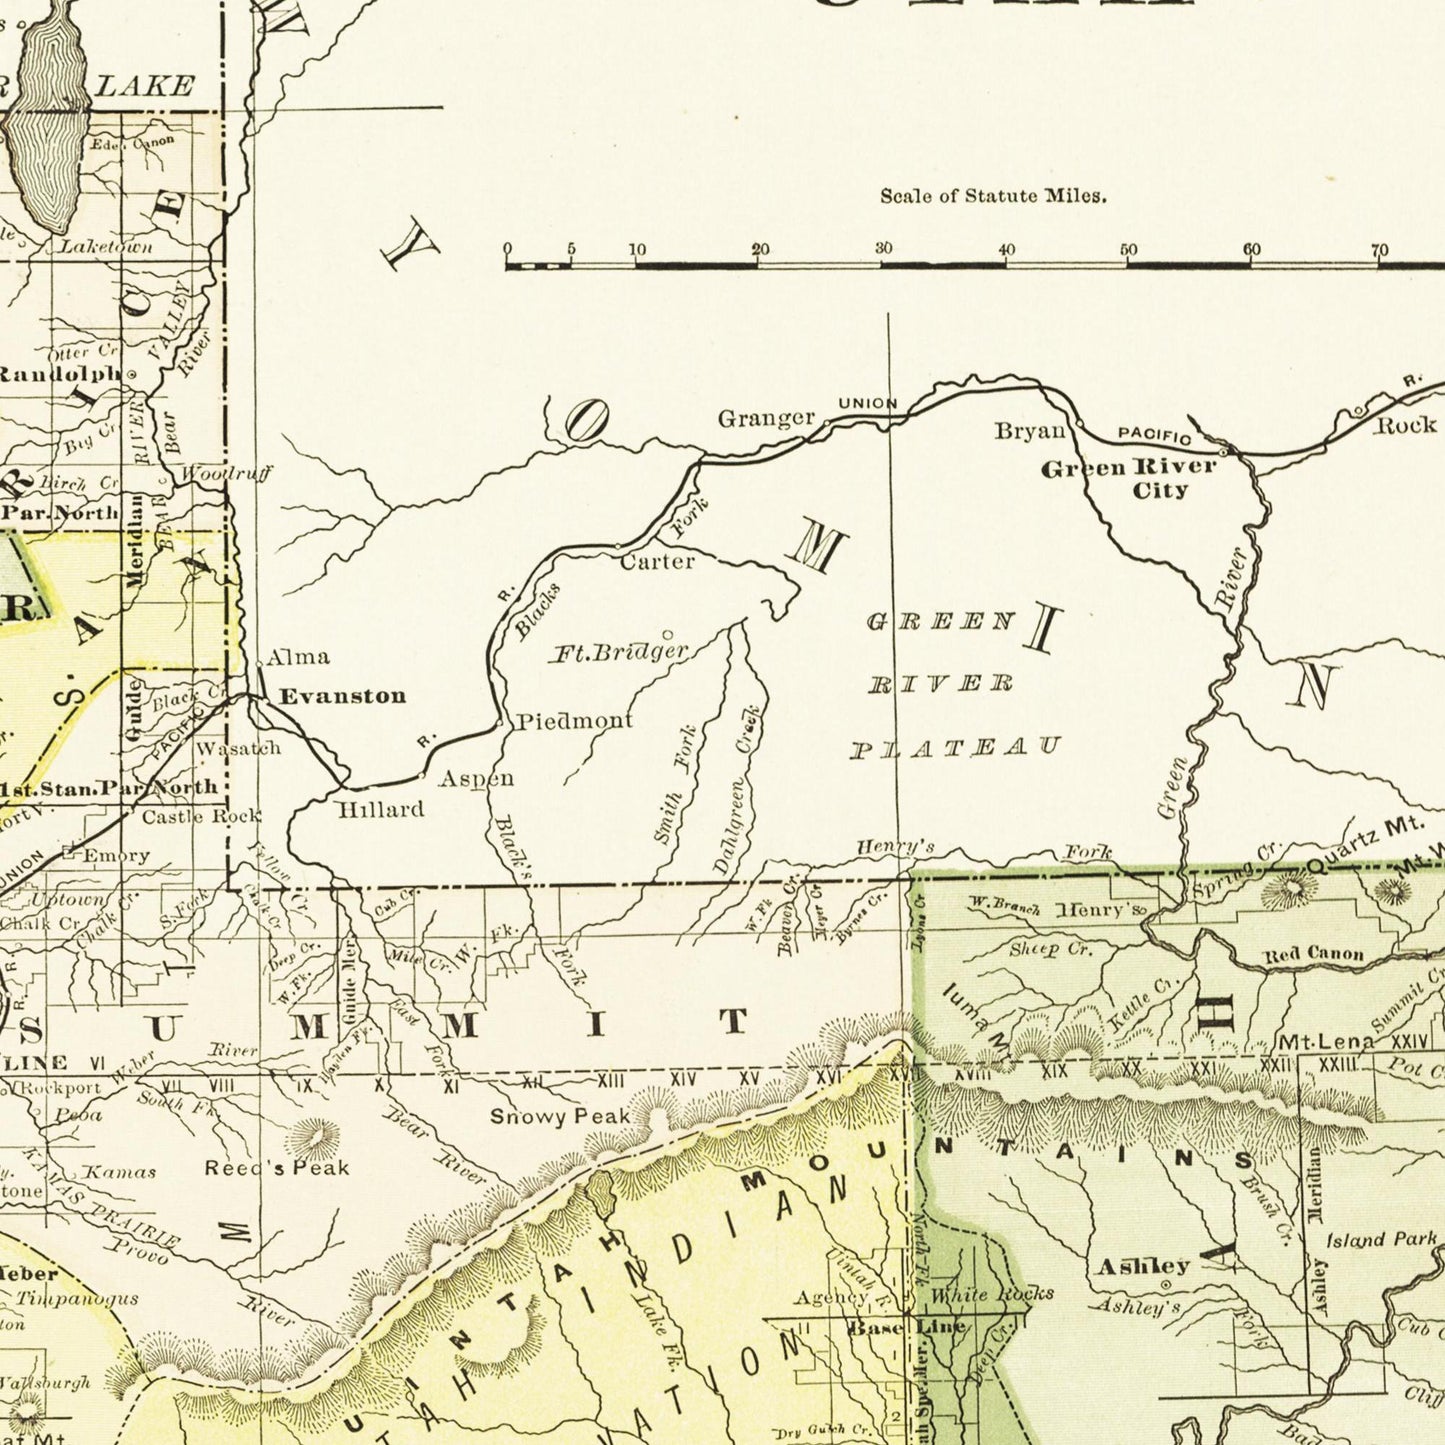 Historische Landkarte Utah um 1882